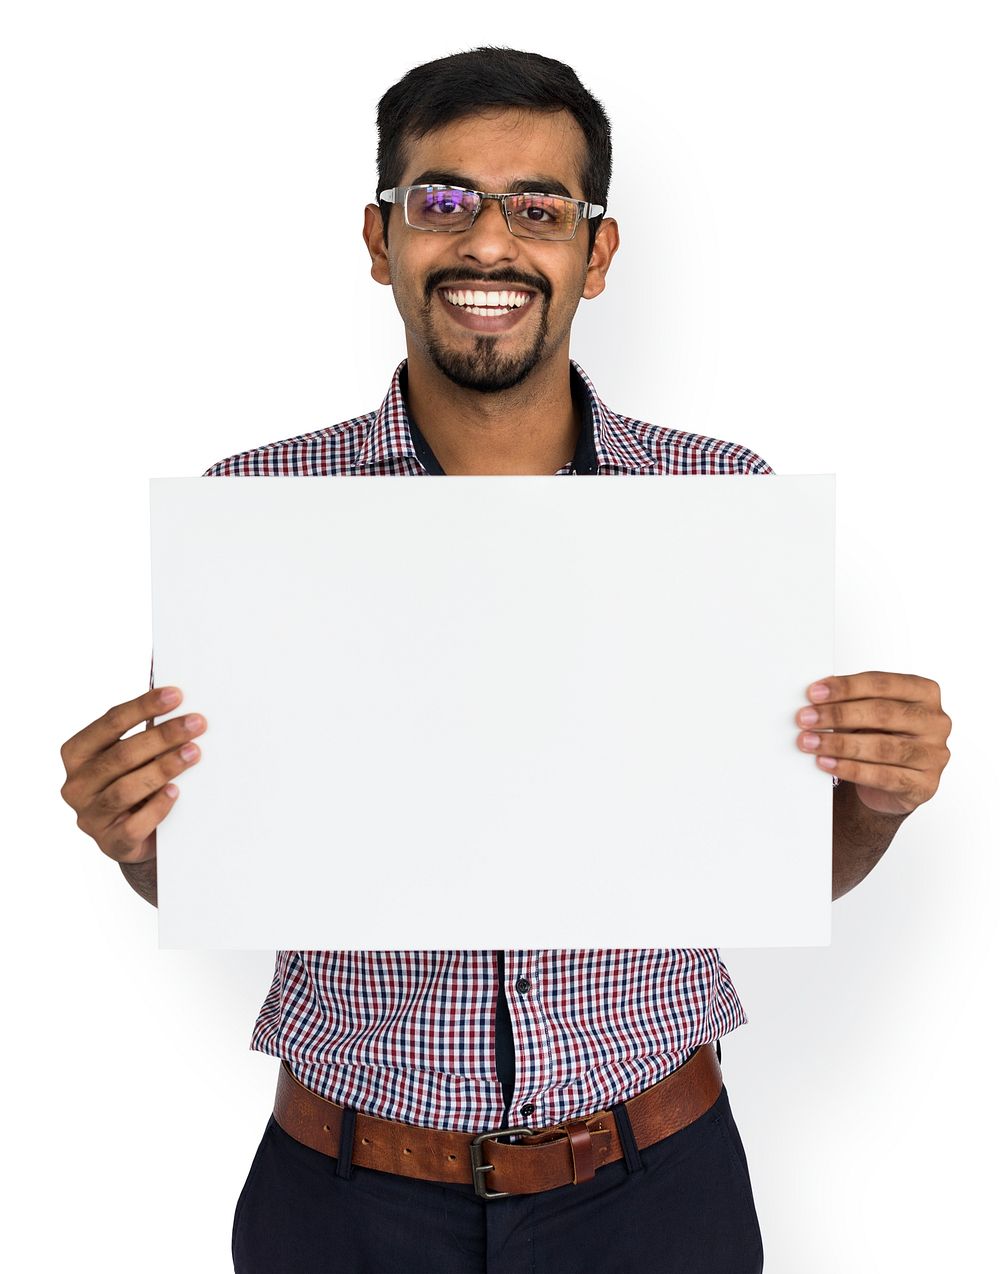 Guy with facial hair holding a blank placard